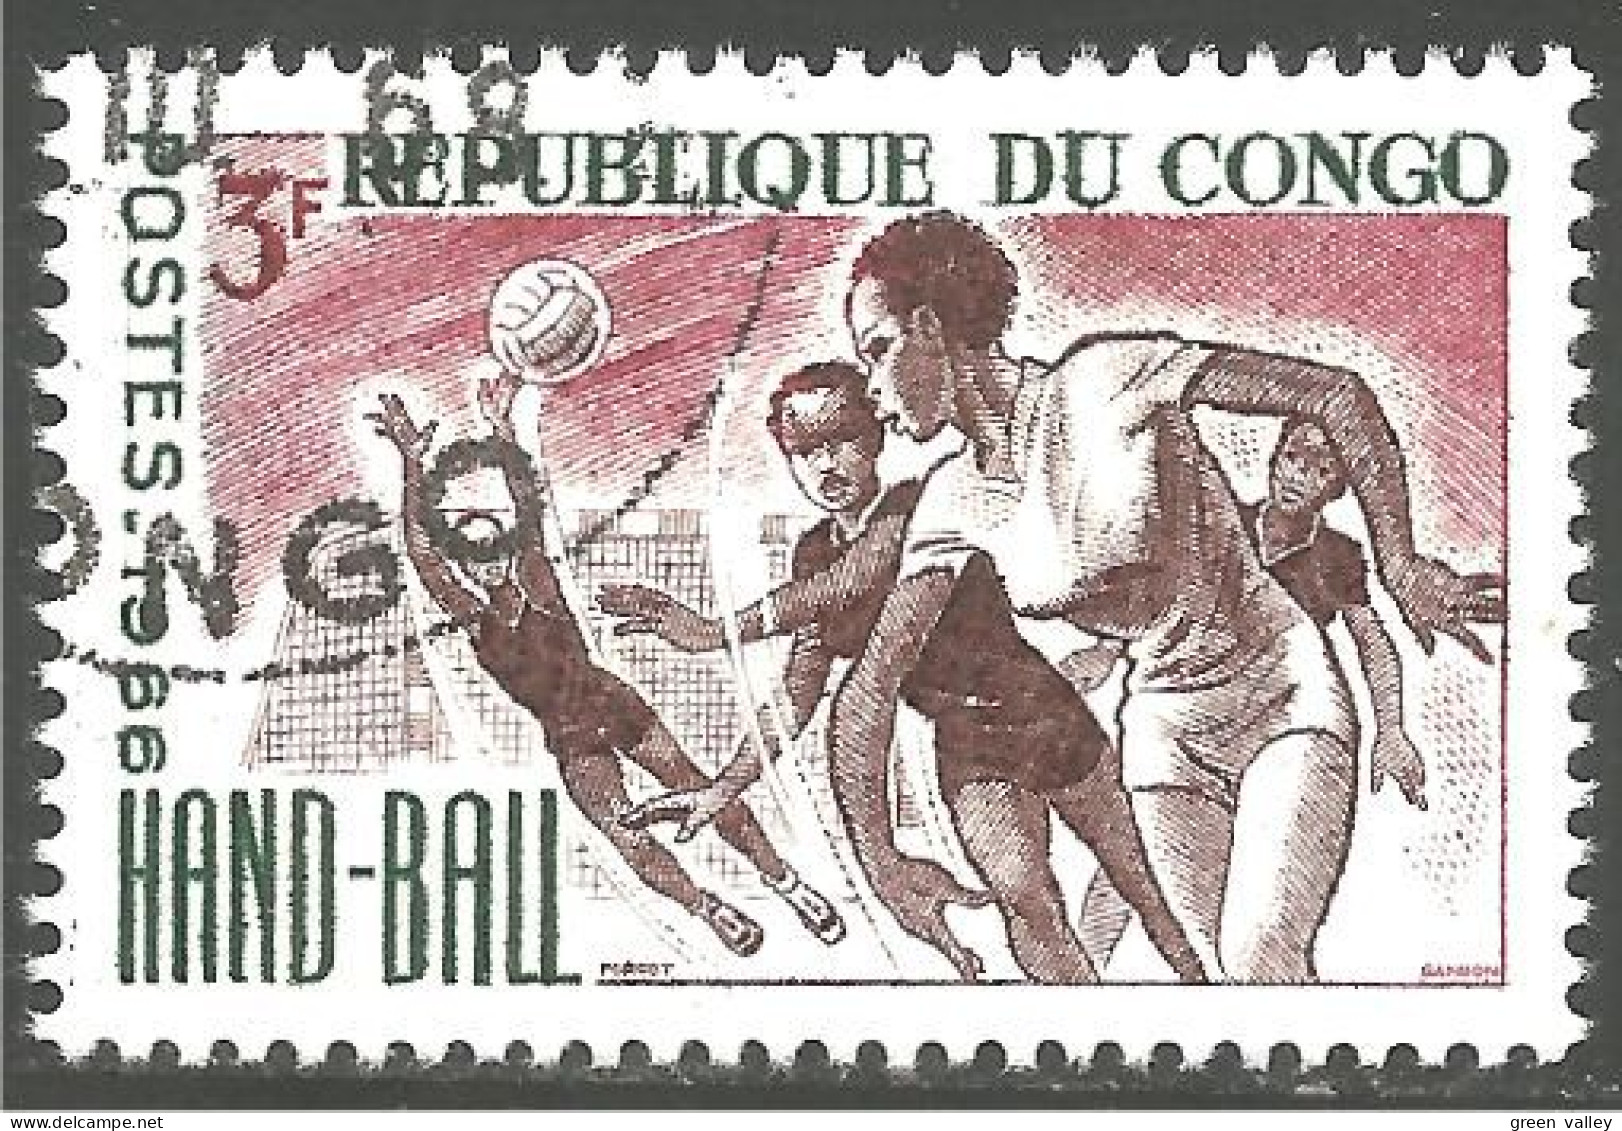 272 Congo Handball (CGO-86) - Hand-Ball